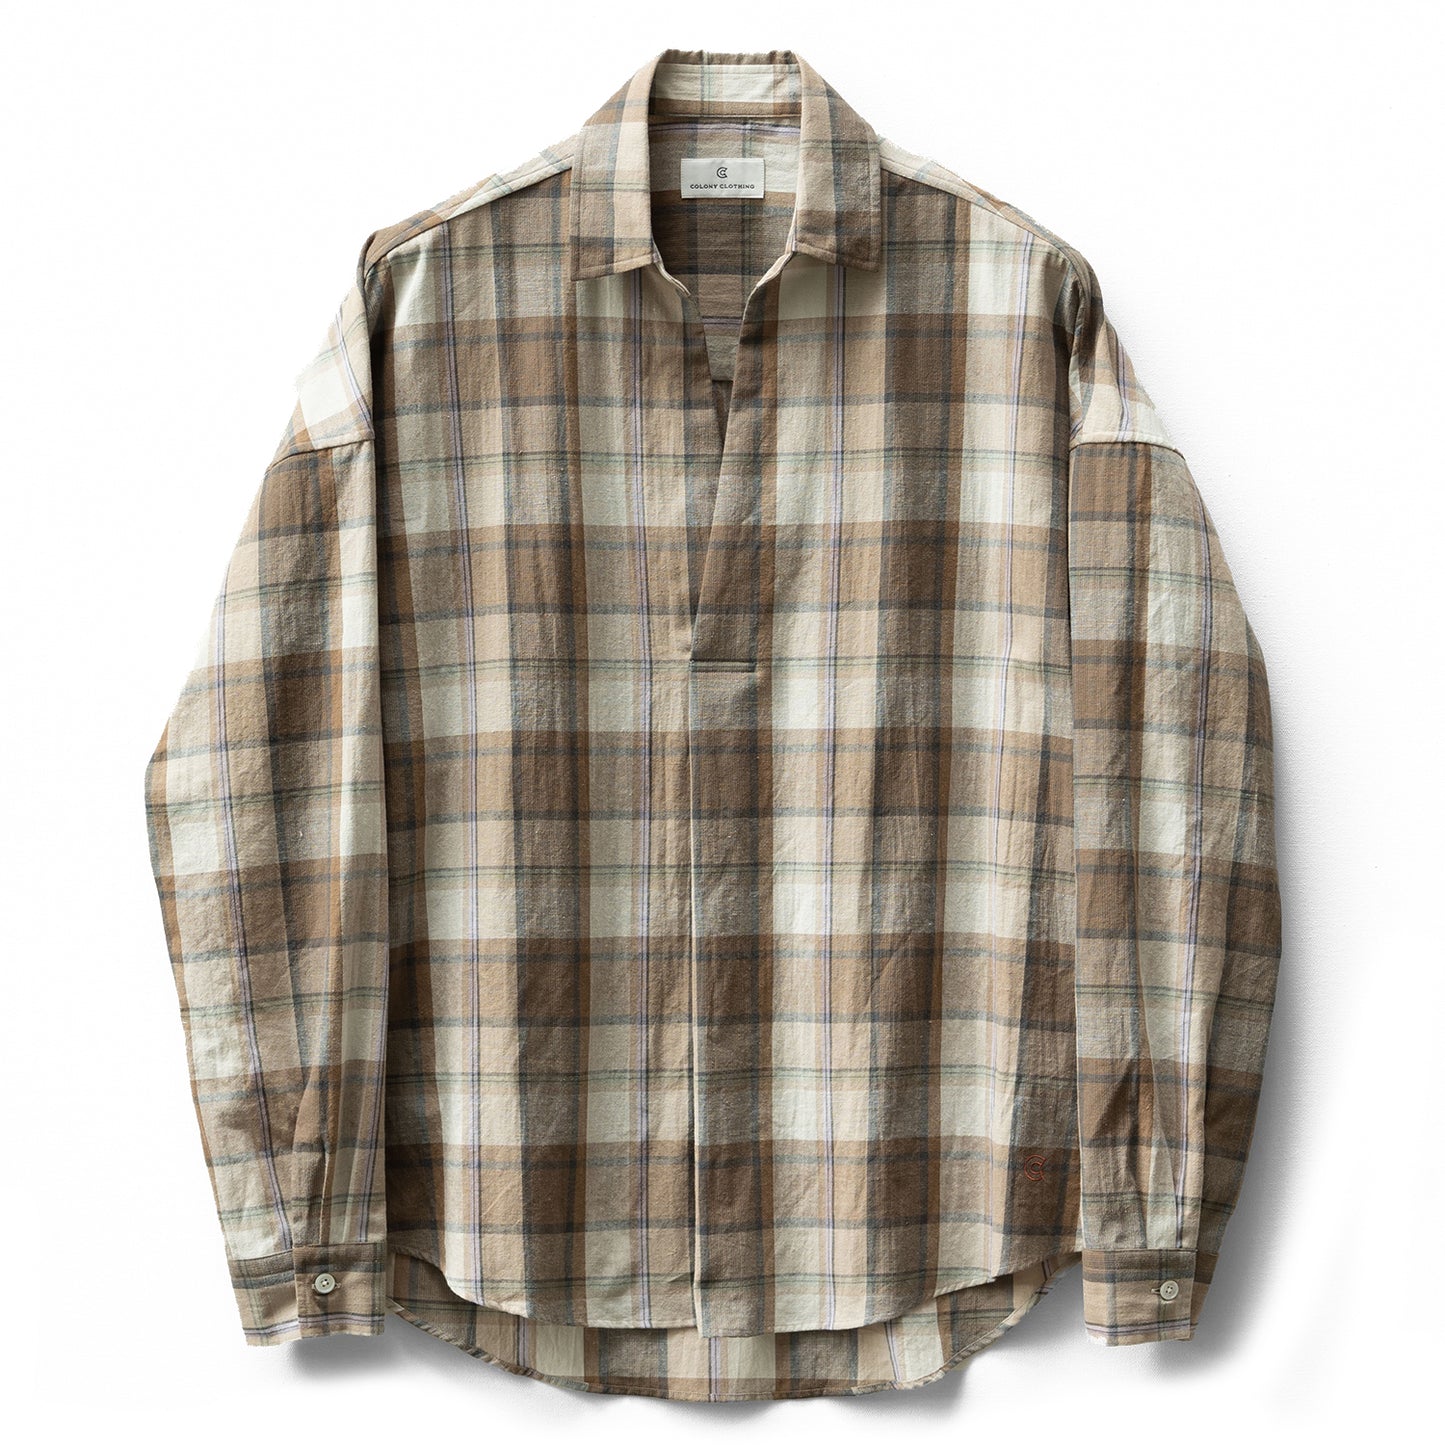 COLONY CLOTHING / ビッグチェック プールサイドシャツ / CC2301-SH02-02